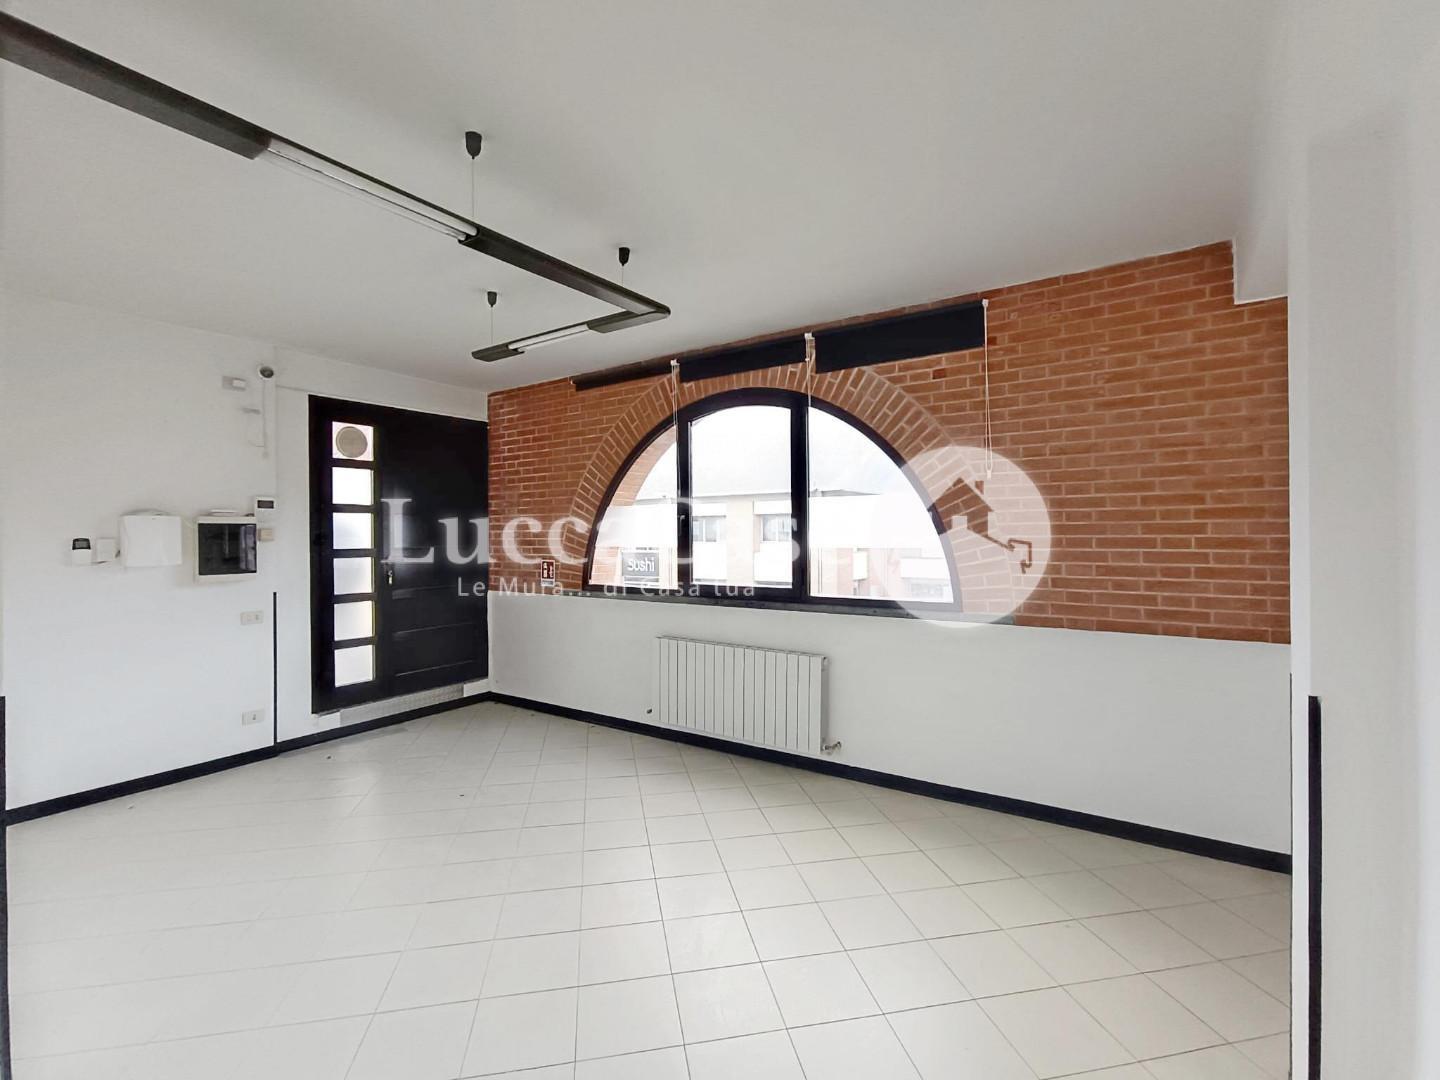 Office for commercial rentals in Coreglia Antelminelli (LU)